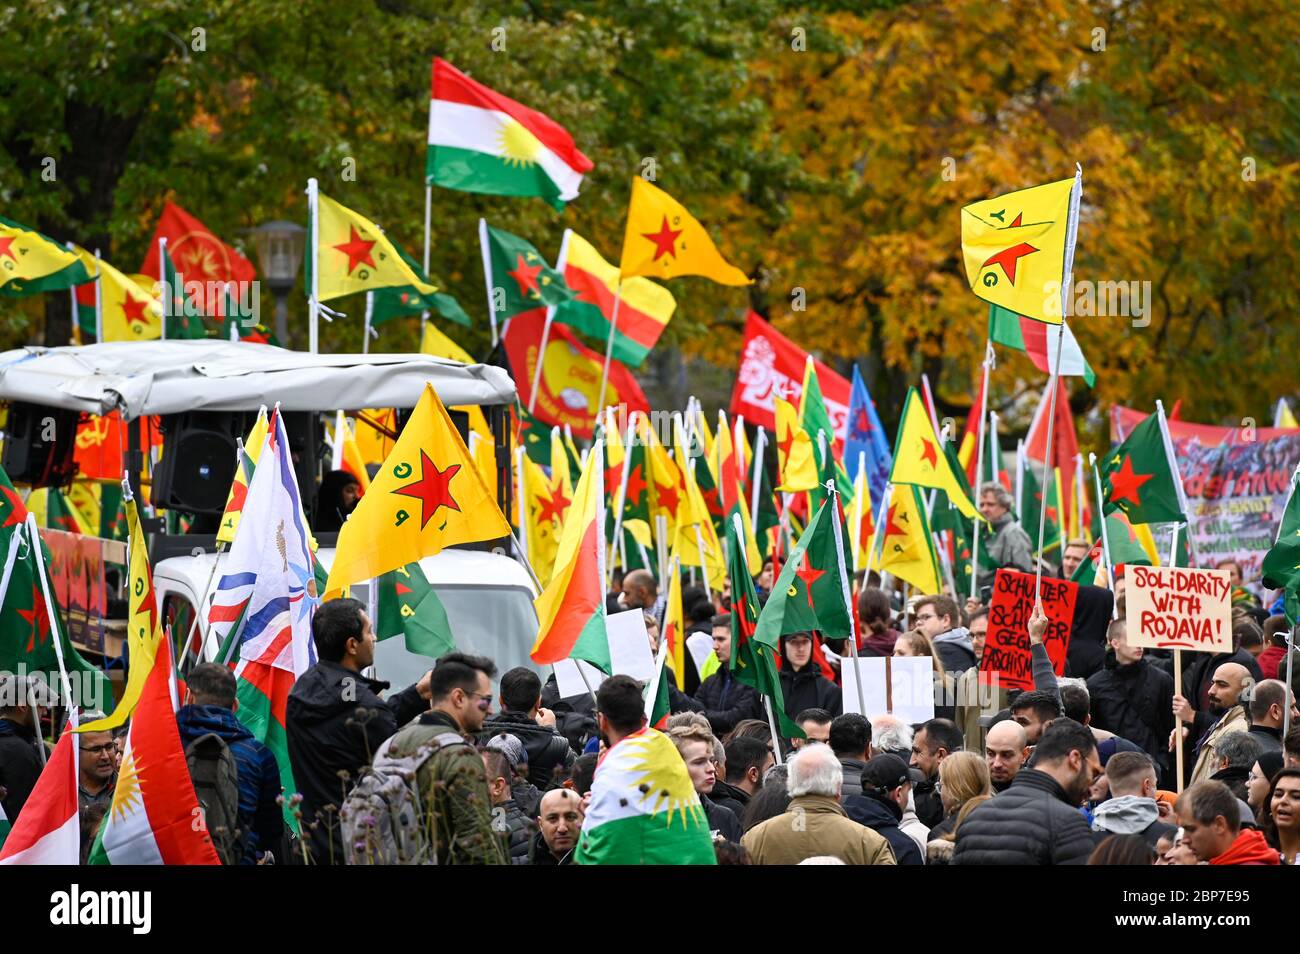 Aktuelles, Kurden-Demonstration in Koeln, Beginn der Veranstaltung am Ebertzplatz Stock Photo